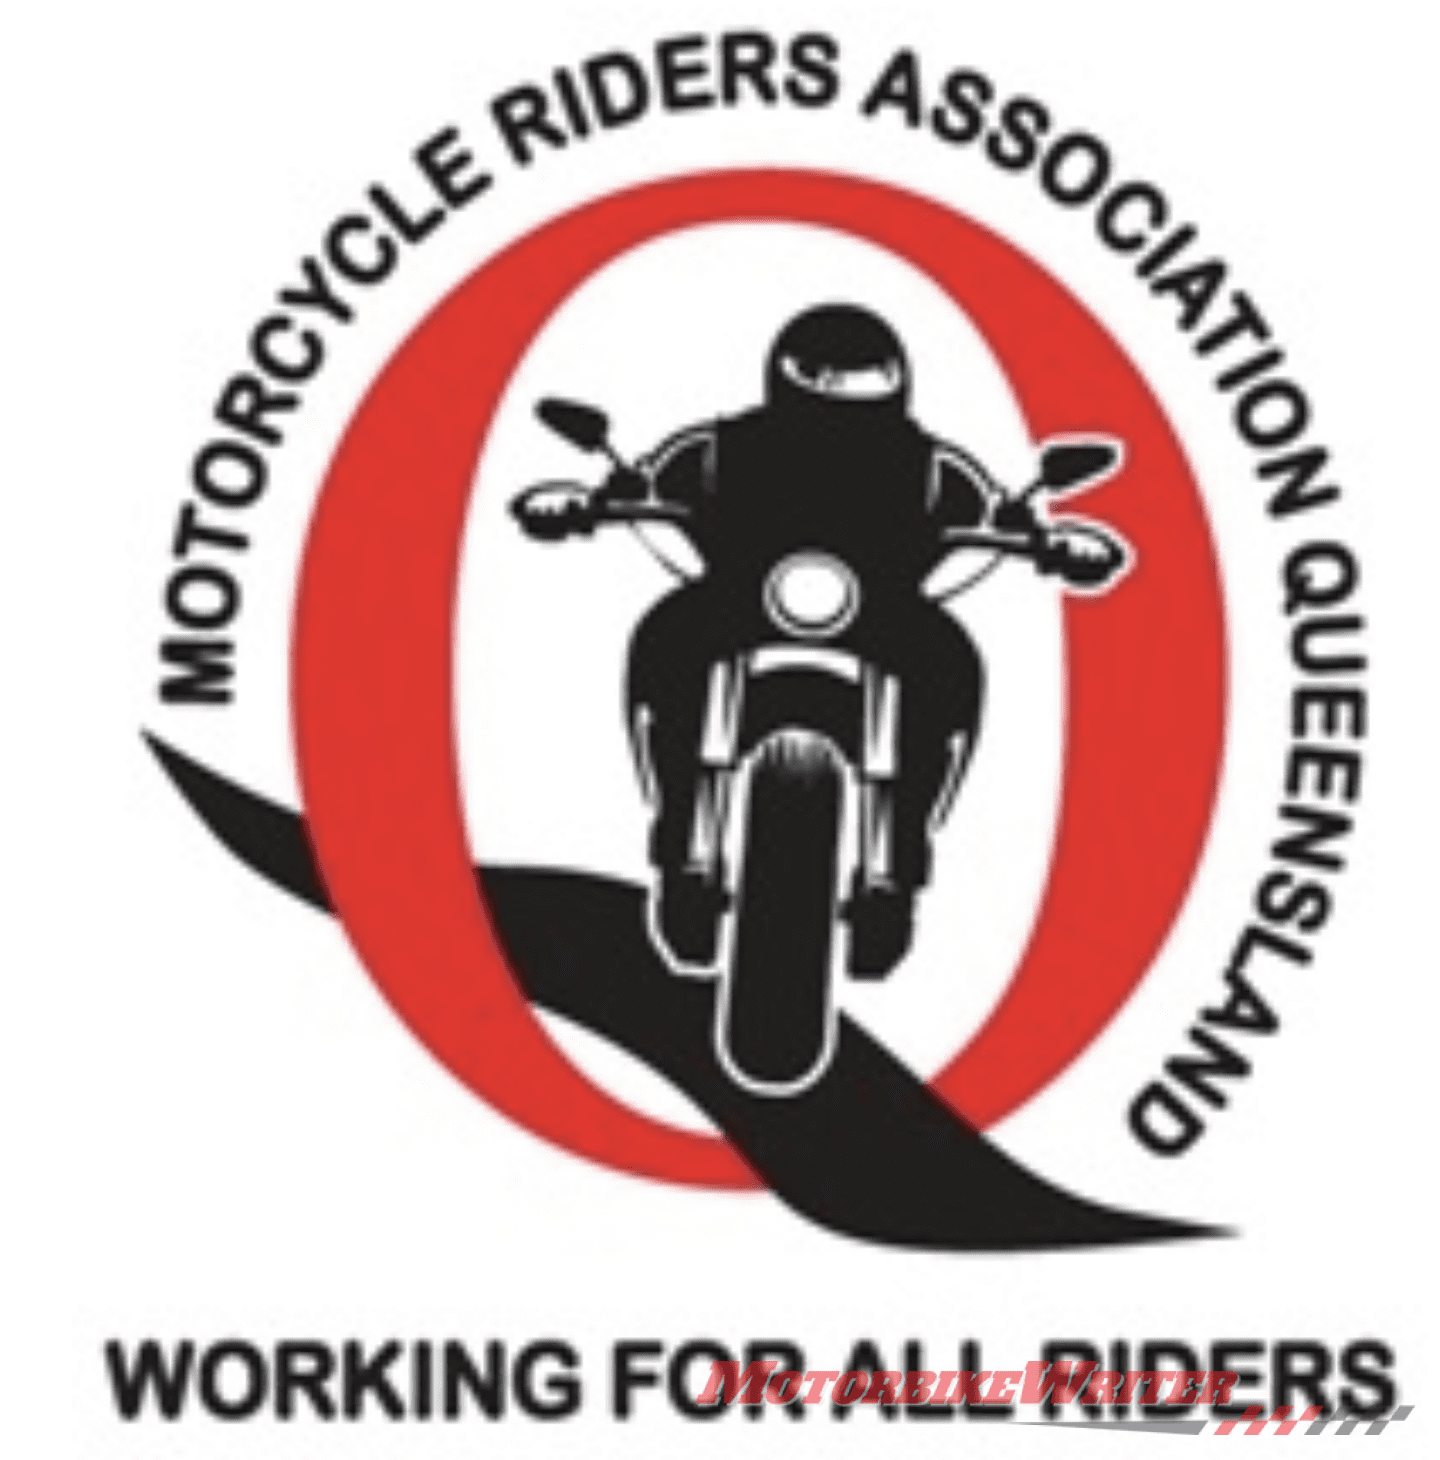 MRAQ Rider representative group closes down